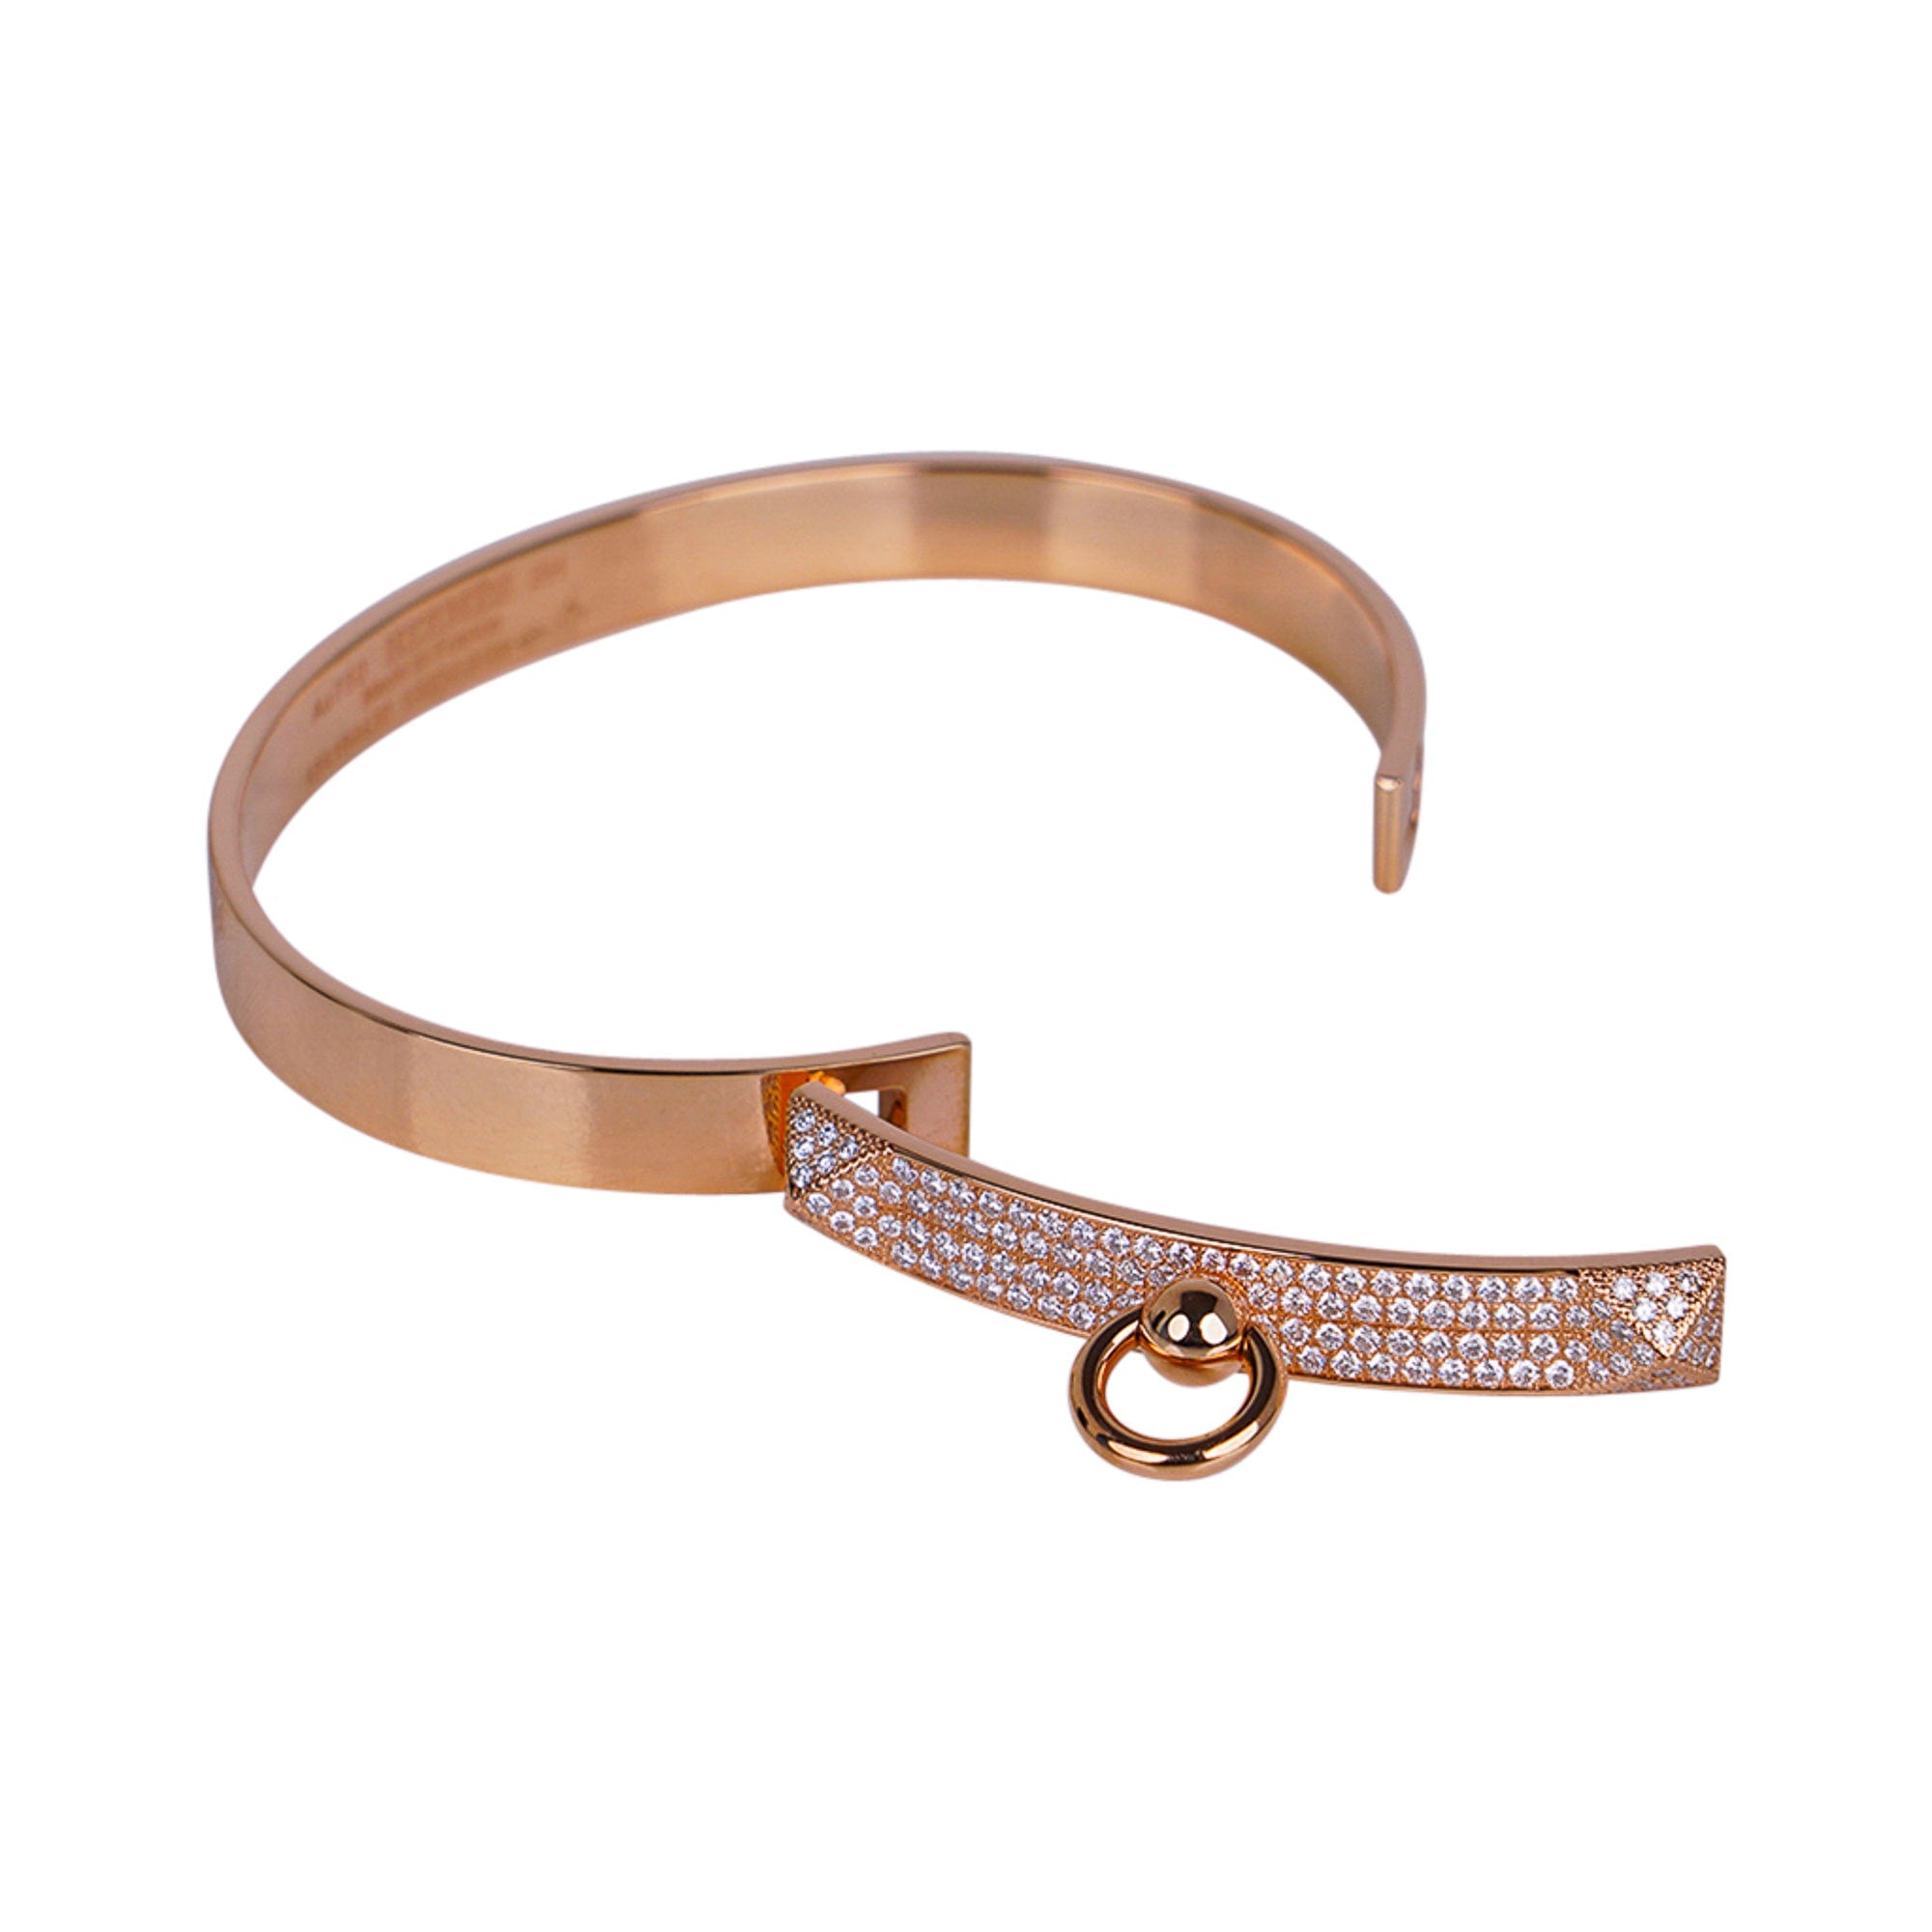 Hermes Chandra Jonc Pearl and Diamond Cuff Bracelet 18k Rose Gold